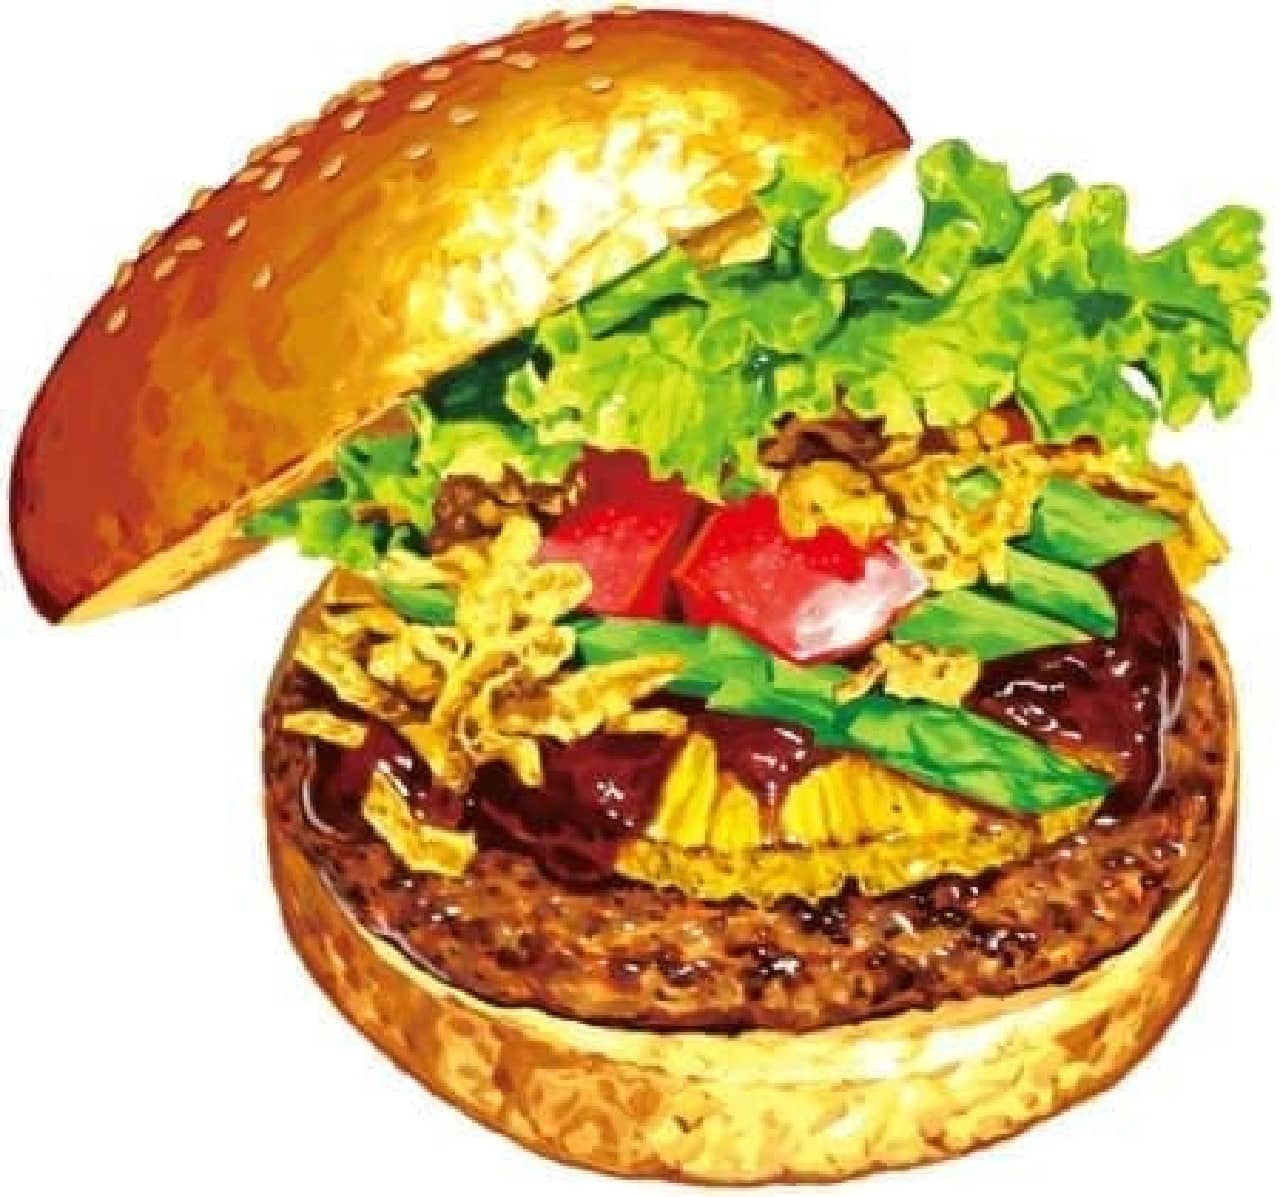 BBQ pineapple burger (image)